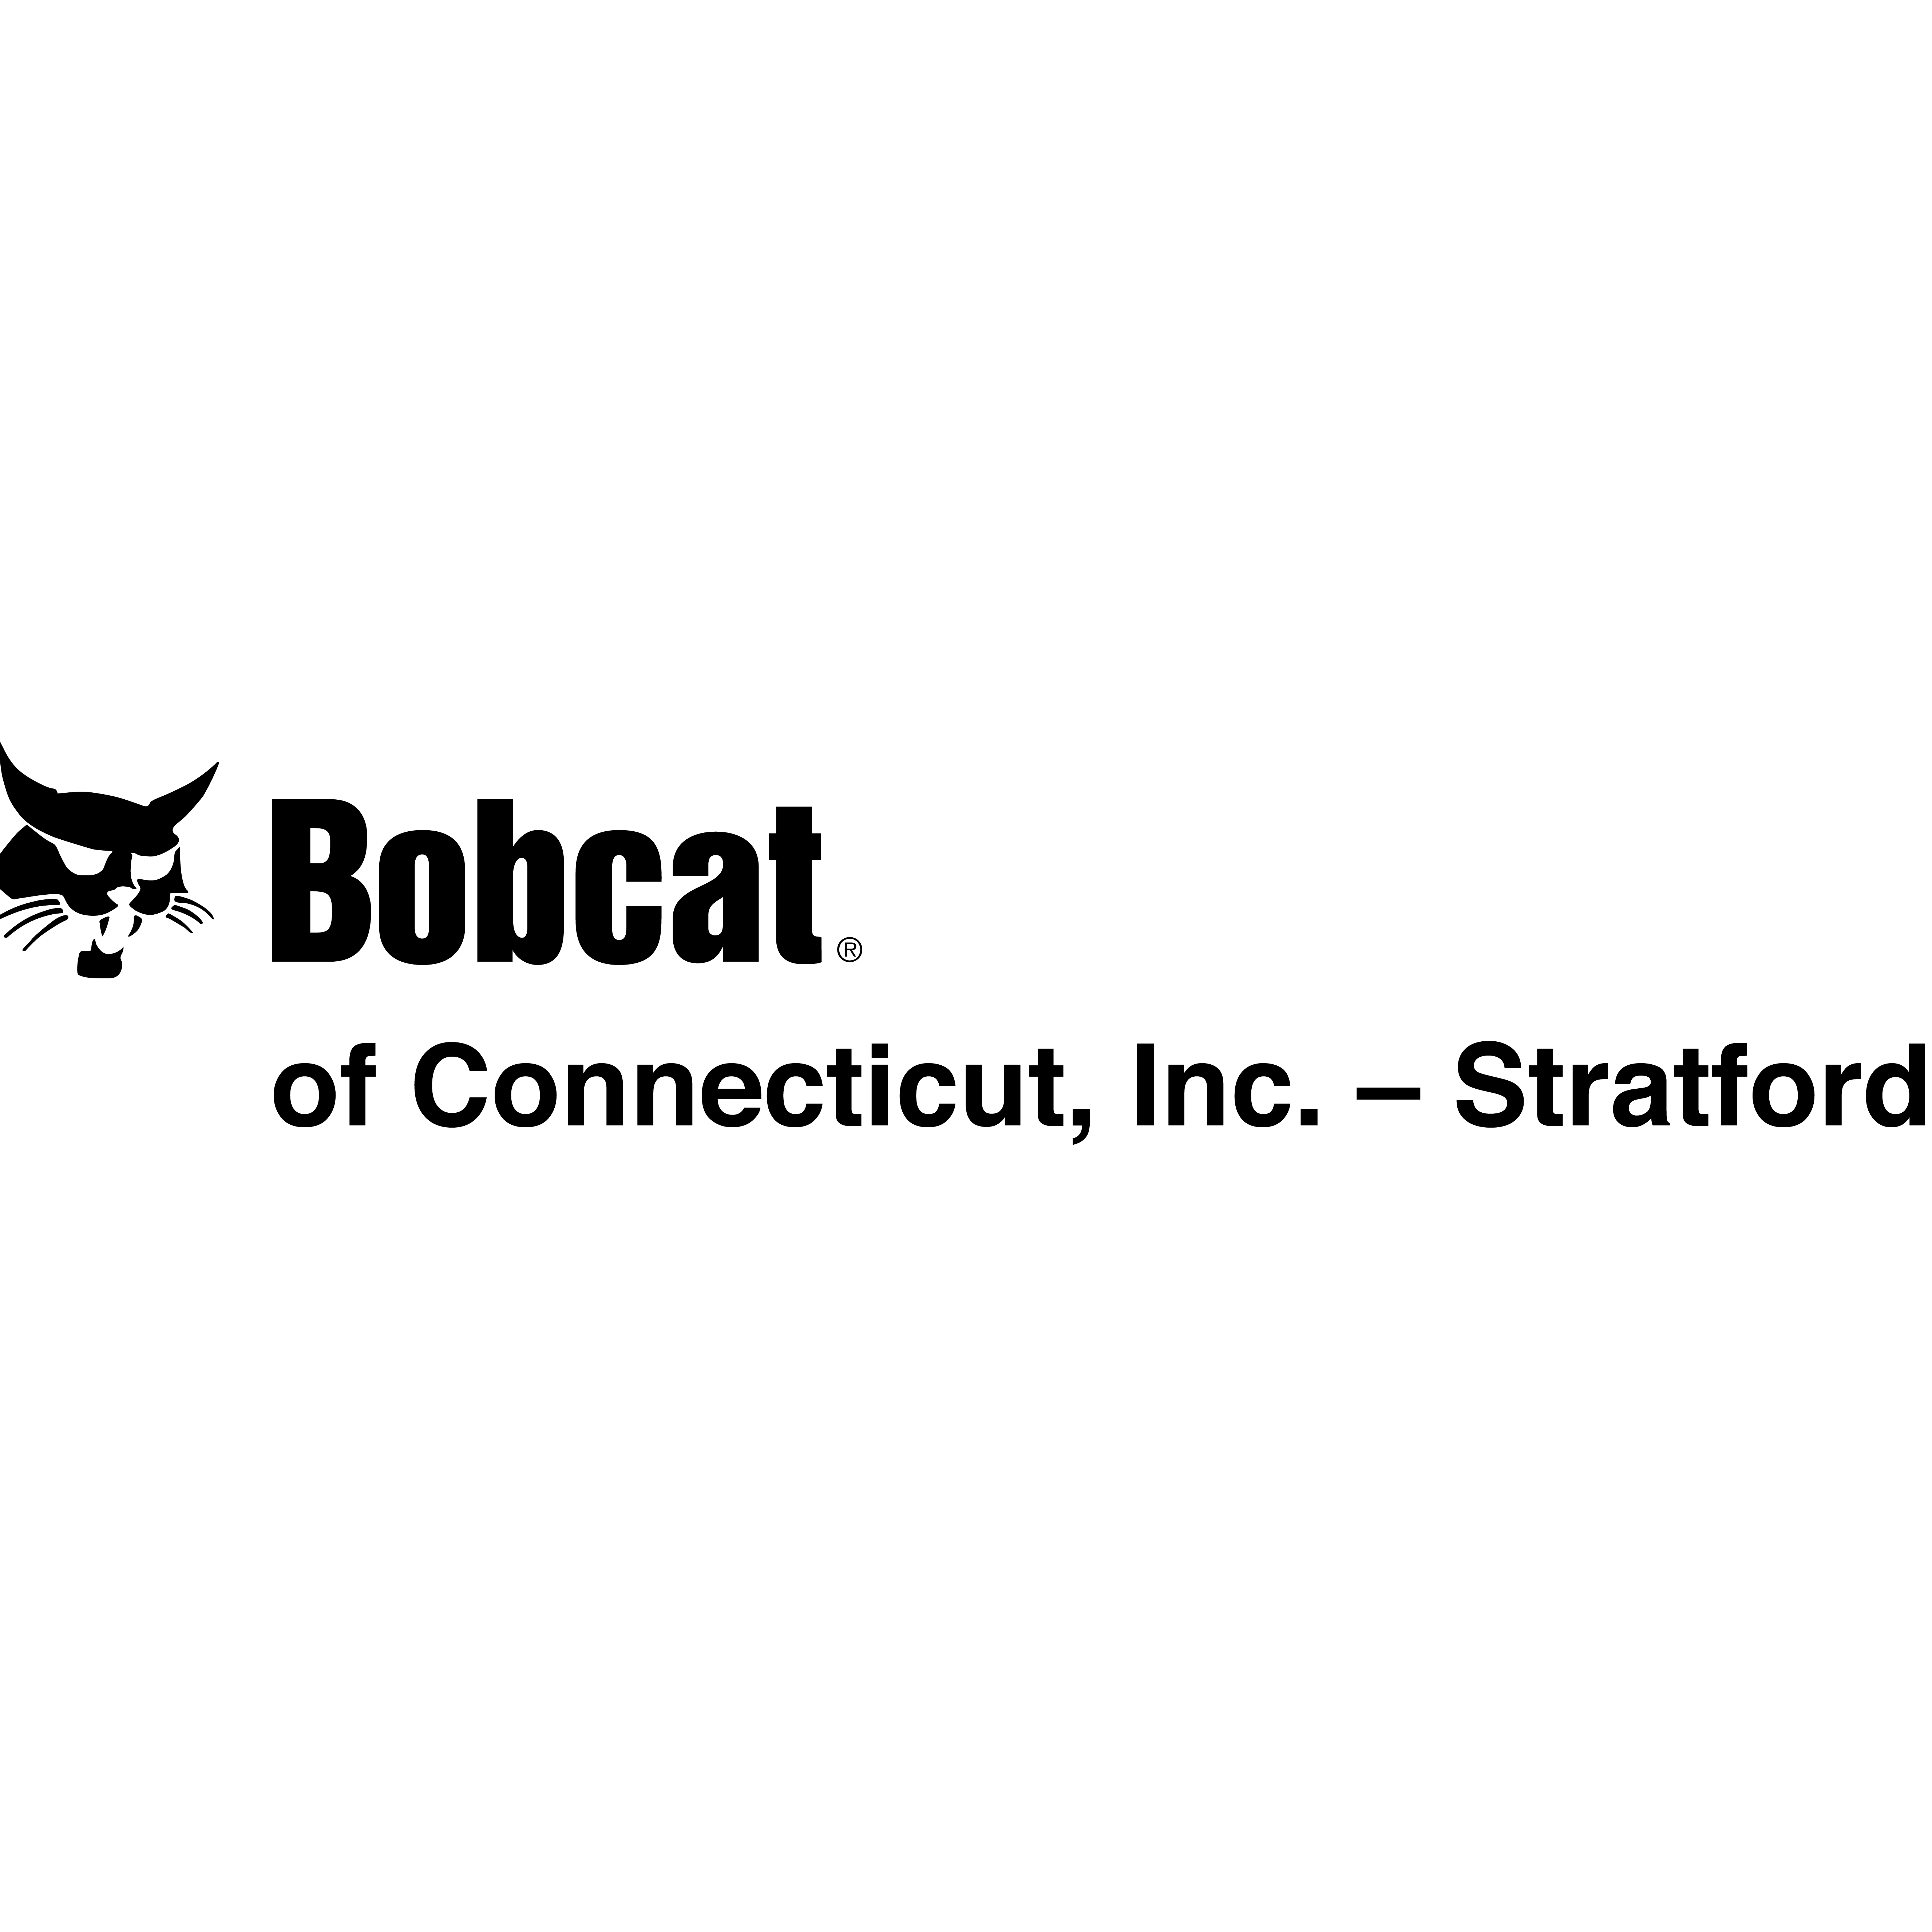 Bobcat of Connecticut, Inc. Photo